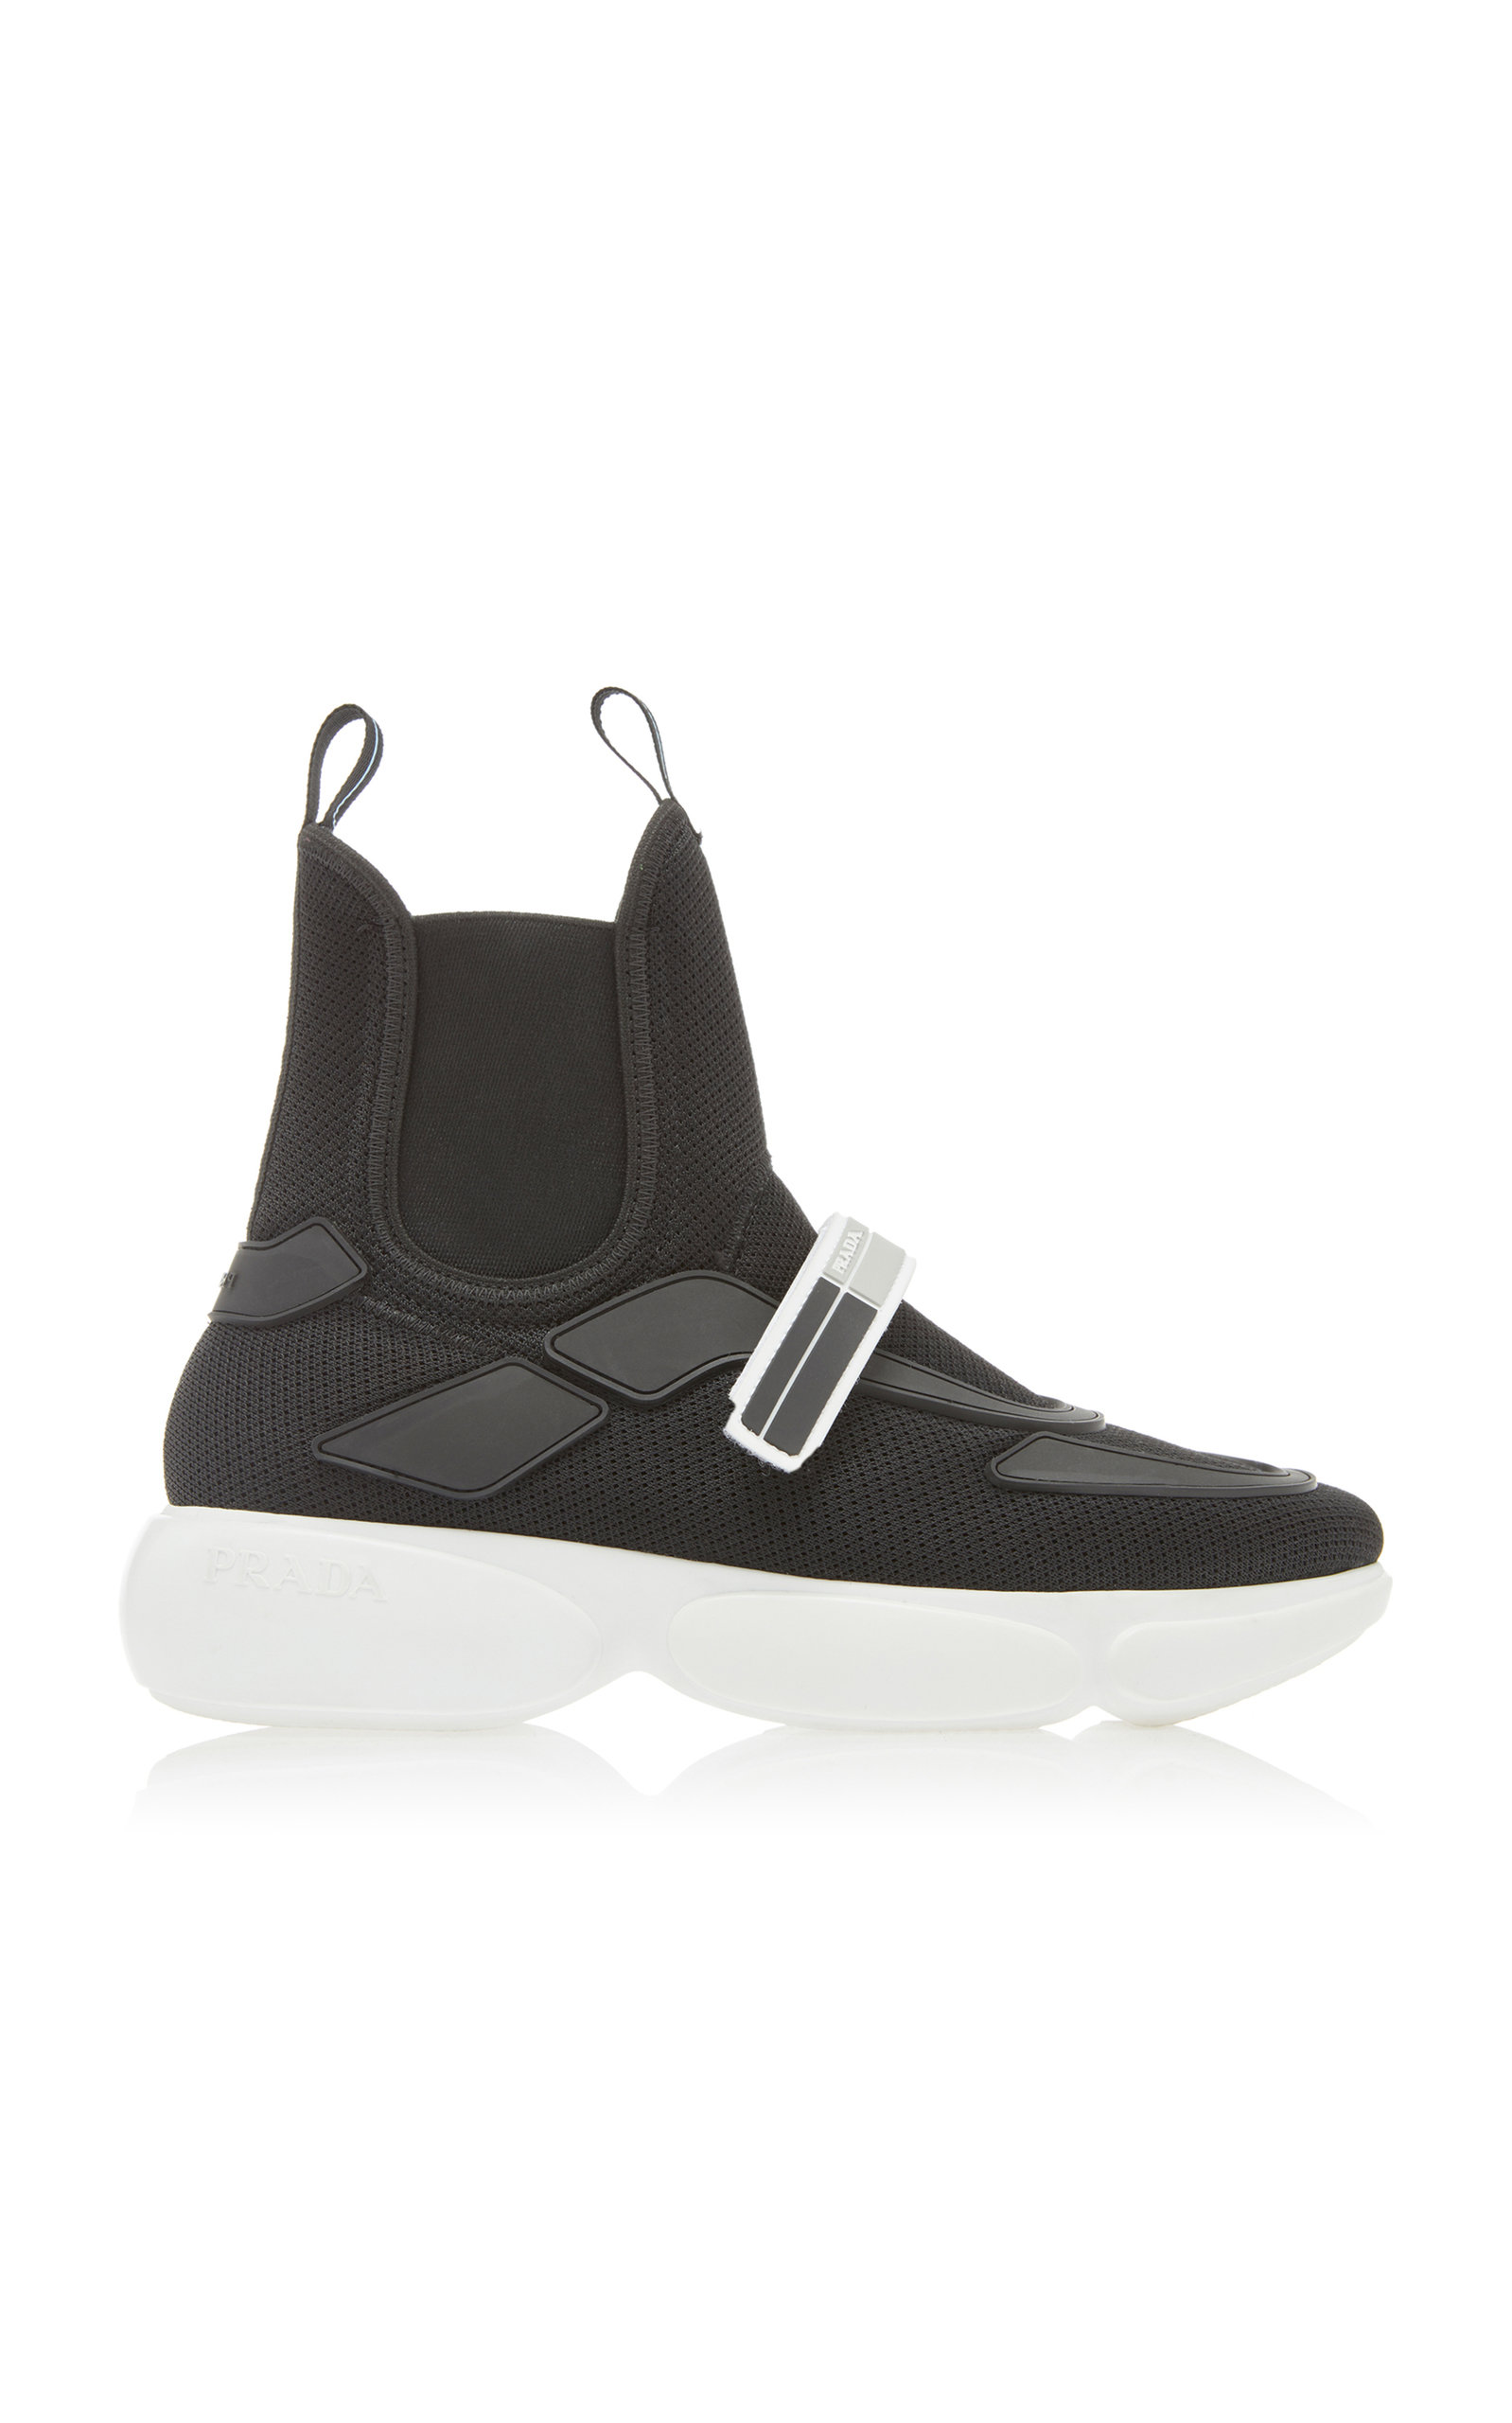 Prada - Women's Tronchetti Sneakers  - Black - IT 36 - Moda Operandi